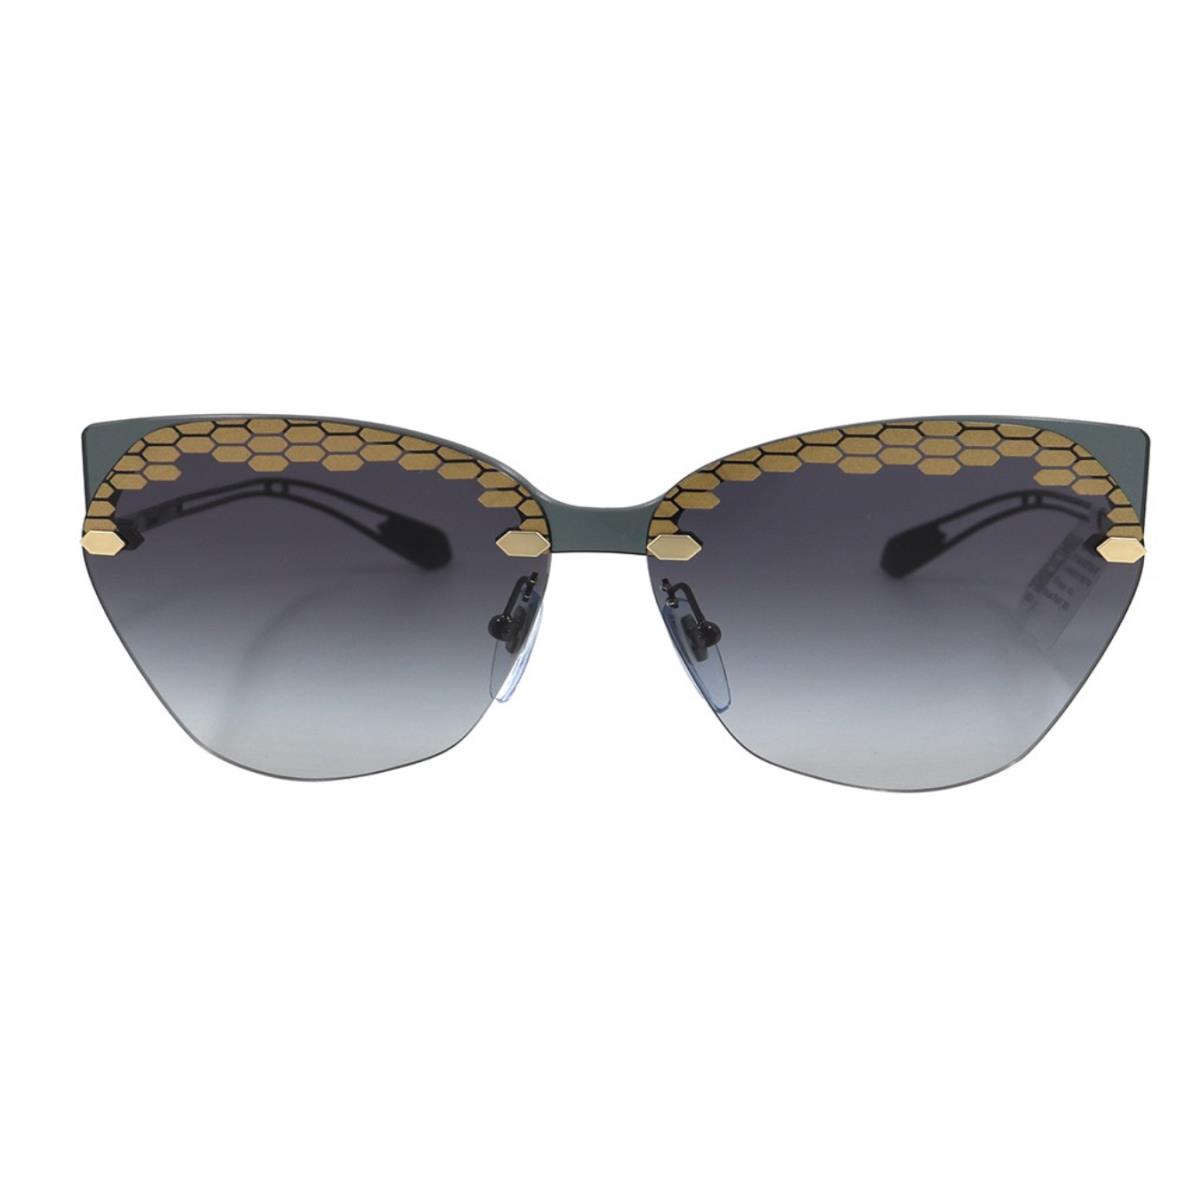 Bvlgari sunglasses  - Gray Gold Frame, Gray Lens 0